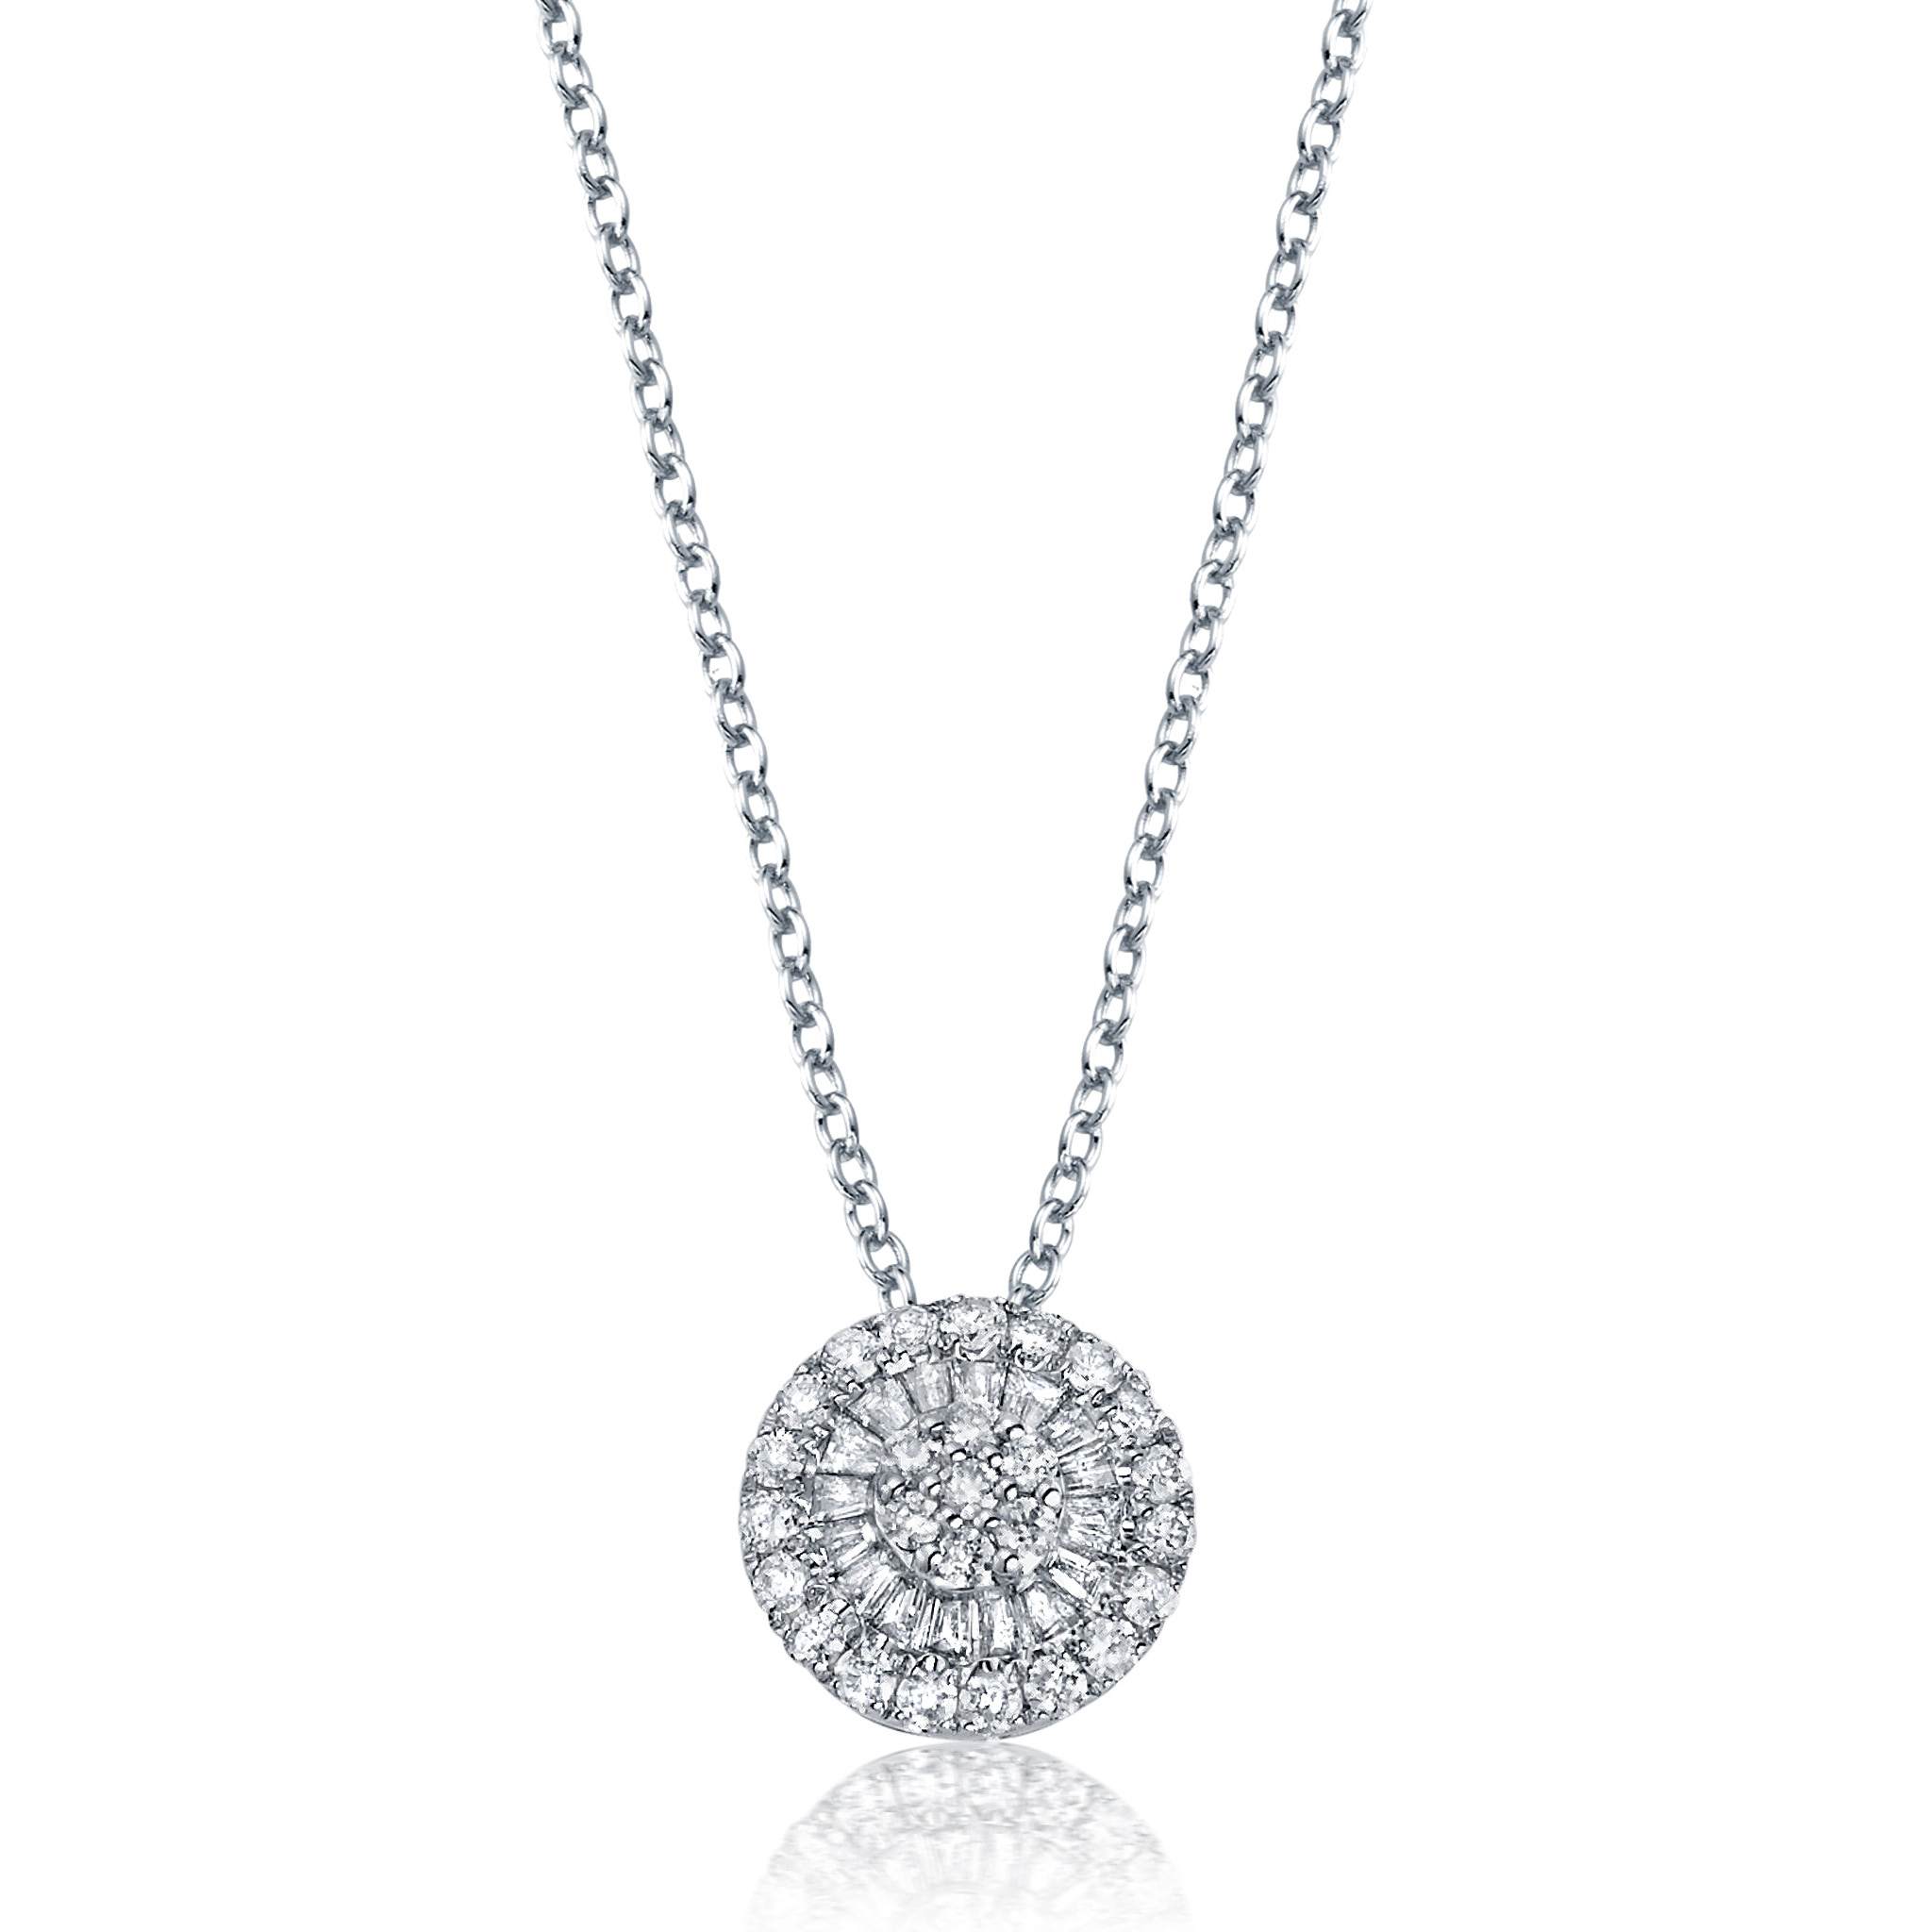 Graziela Gems - Necklace - Diamond Tiny Pizza Necklace - White Gold